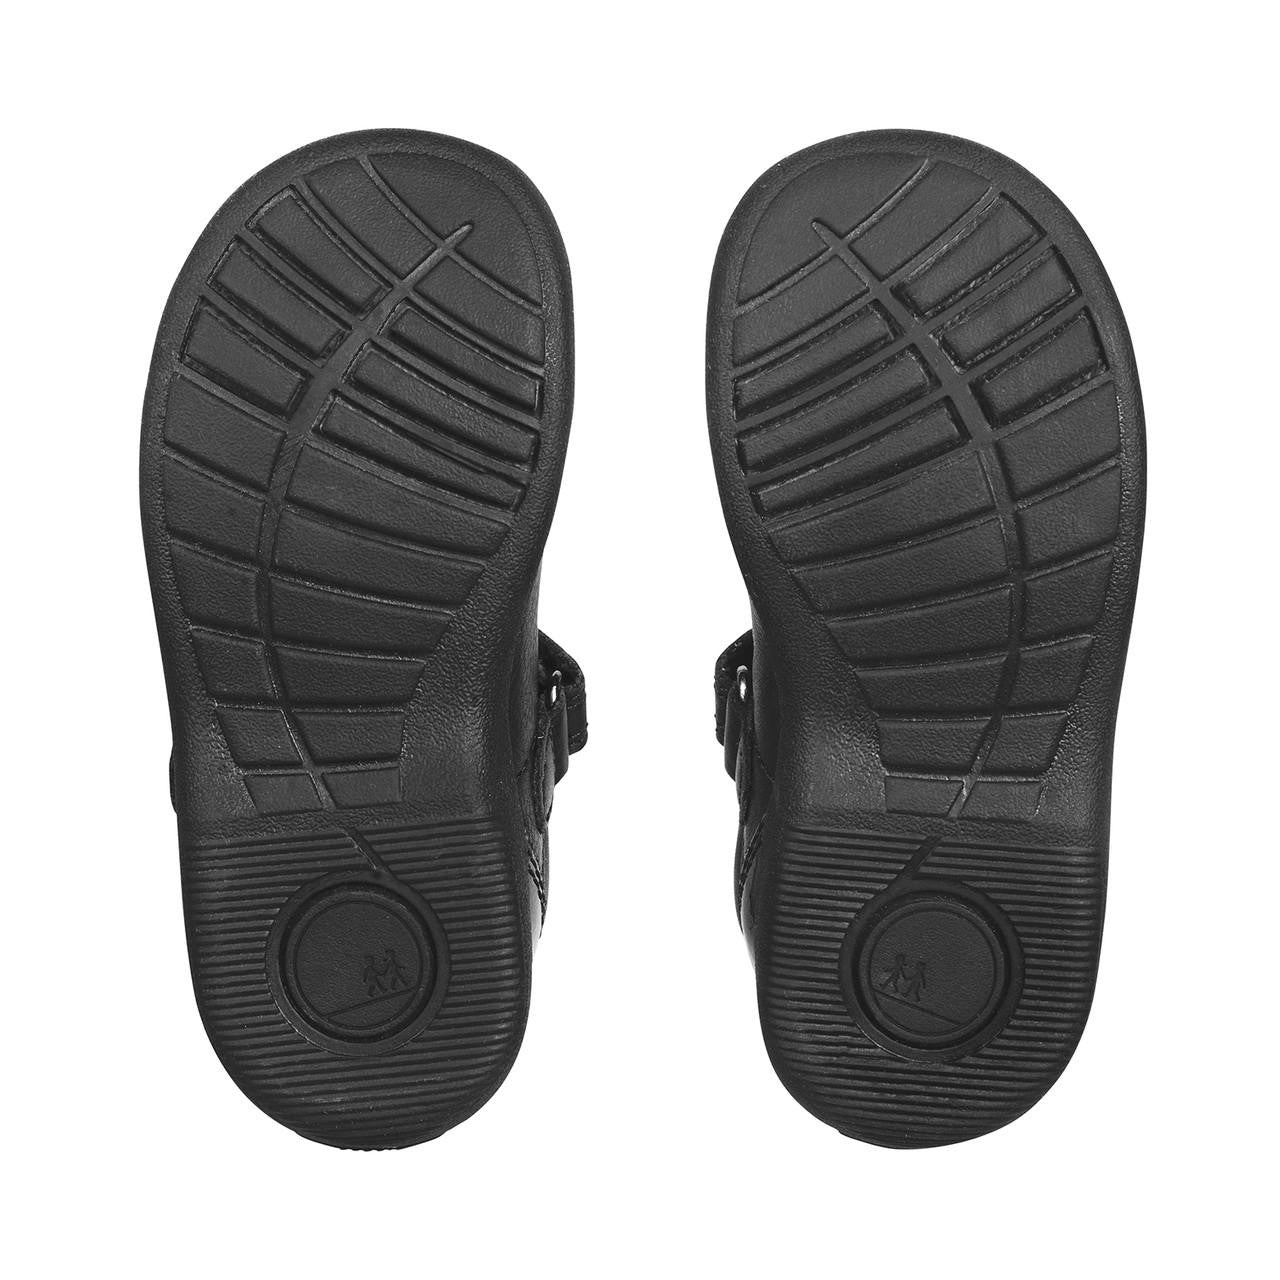 StartRite DAZZLE Leather School Shoes (Black) 26-28.5